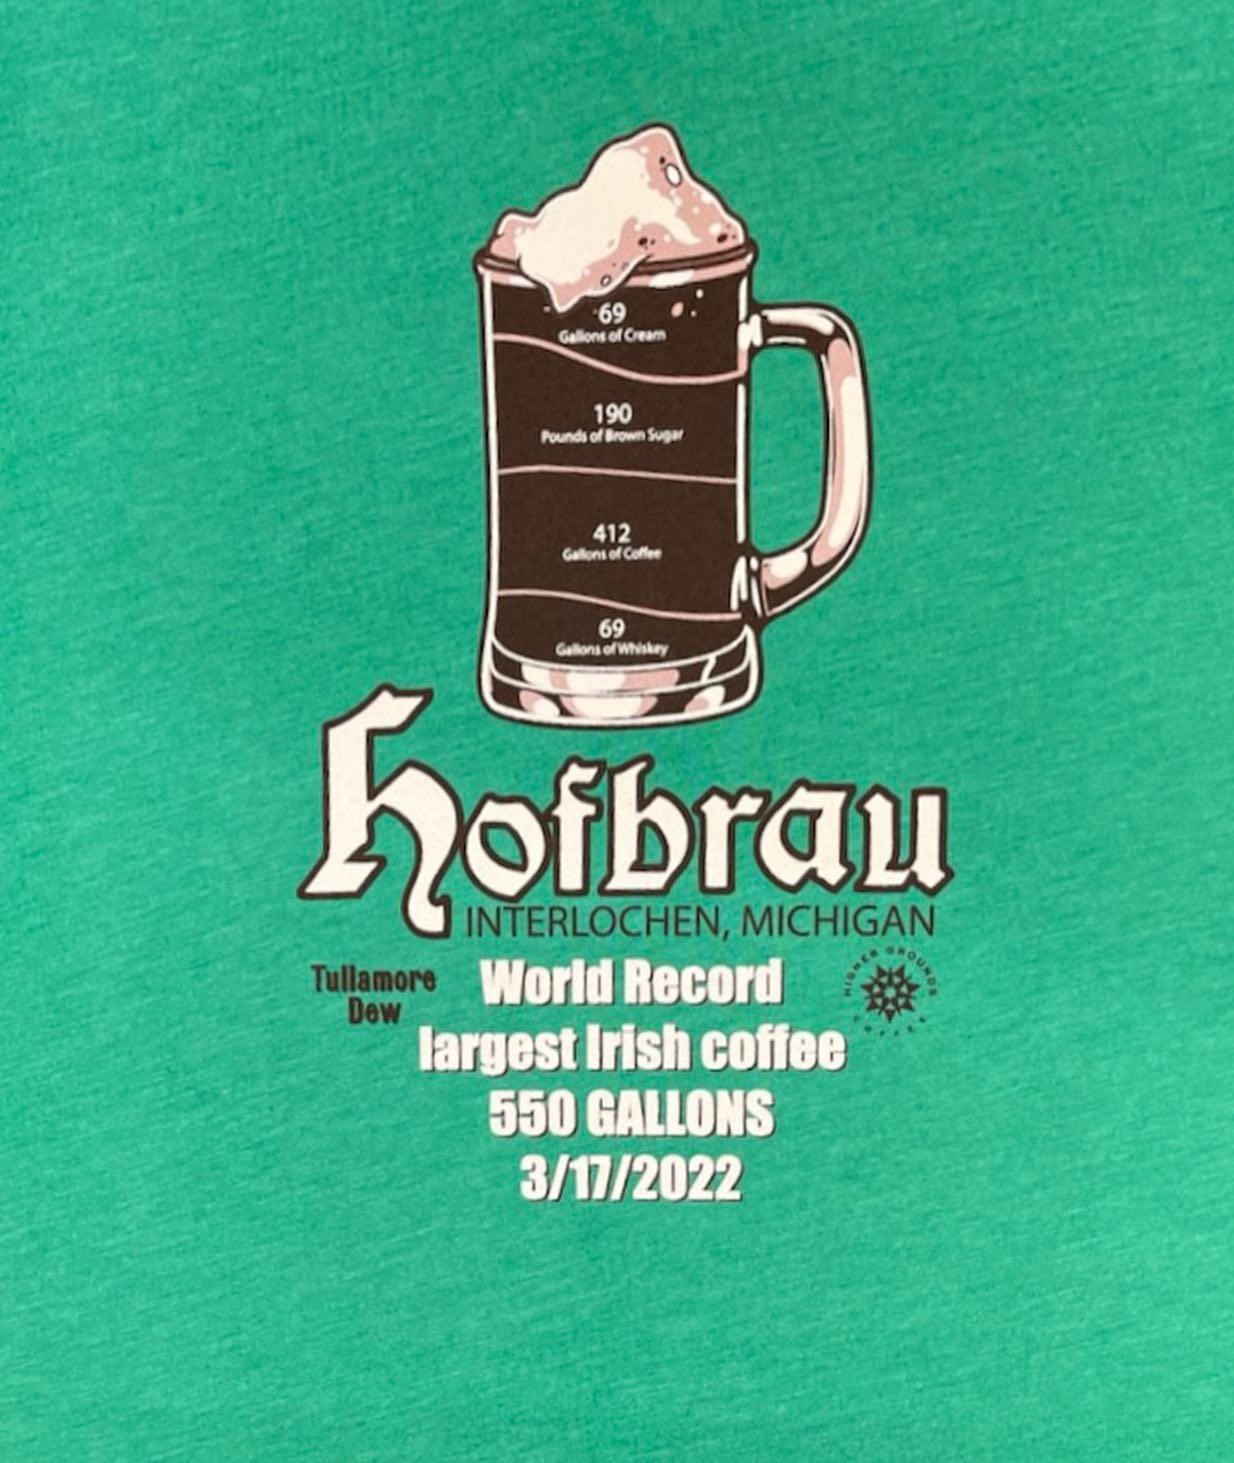 Largest Irish Coffee: Interlochen's Hofbrau sets world record